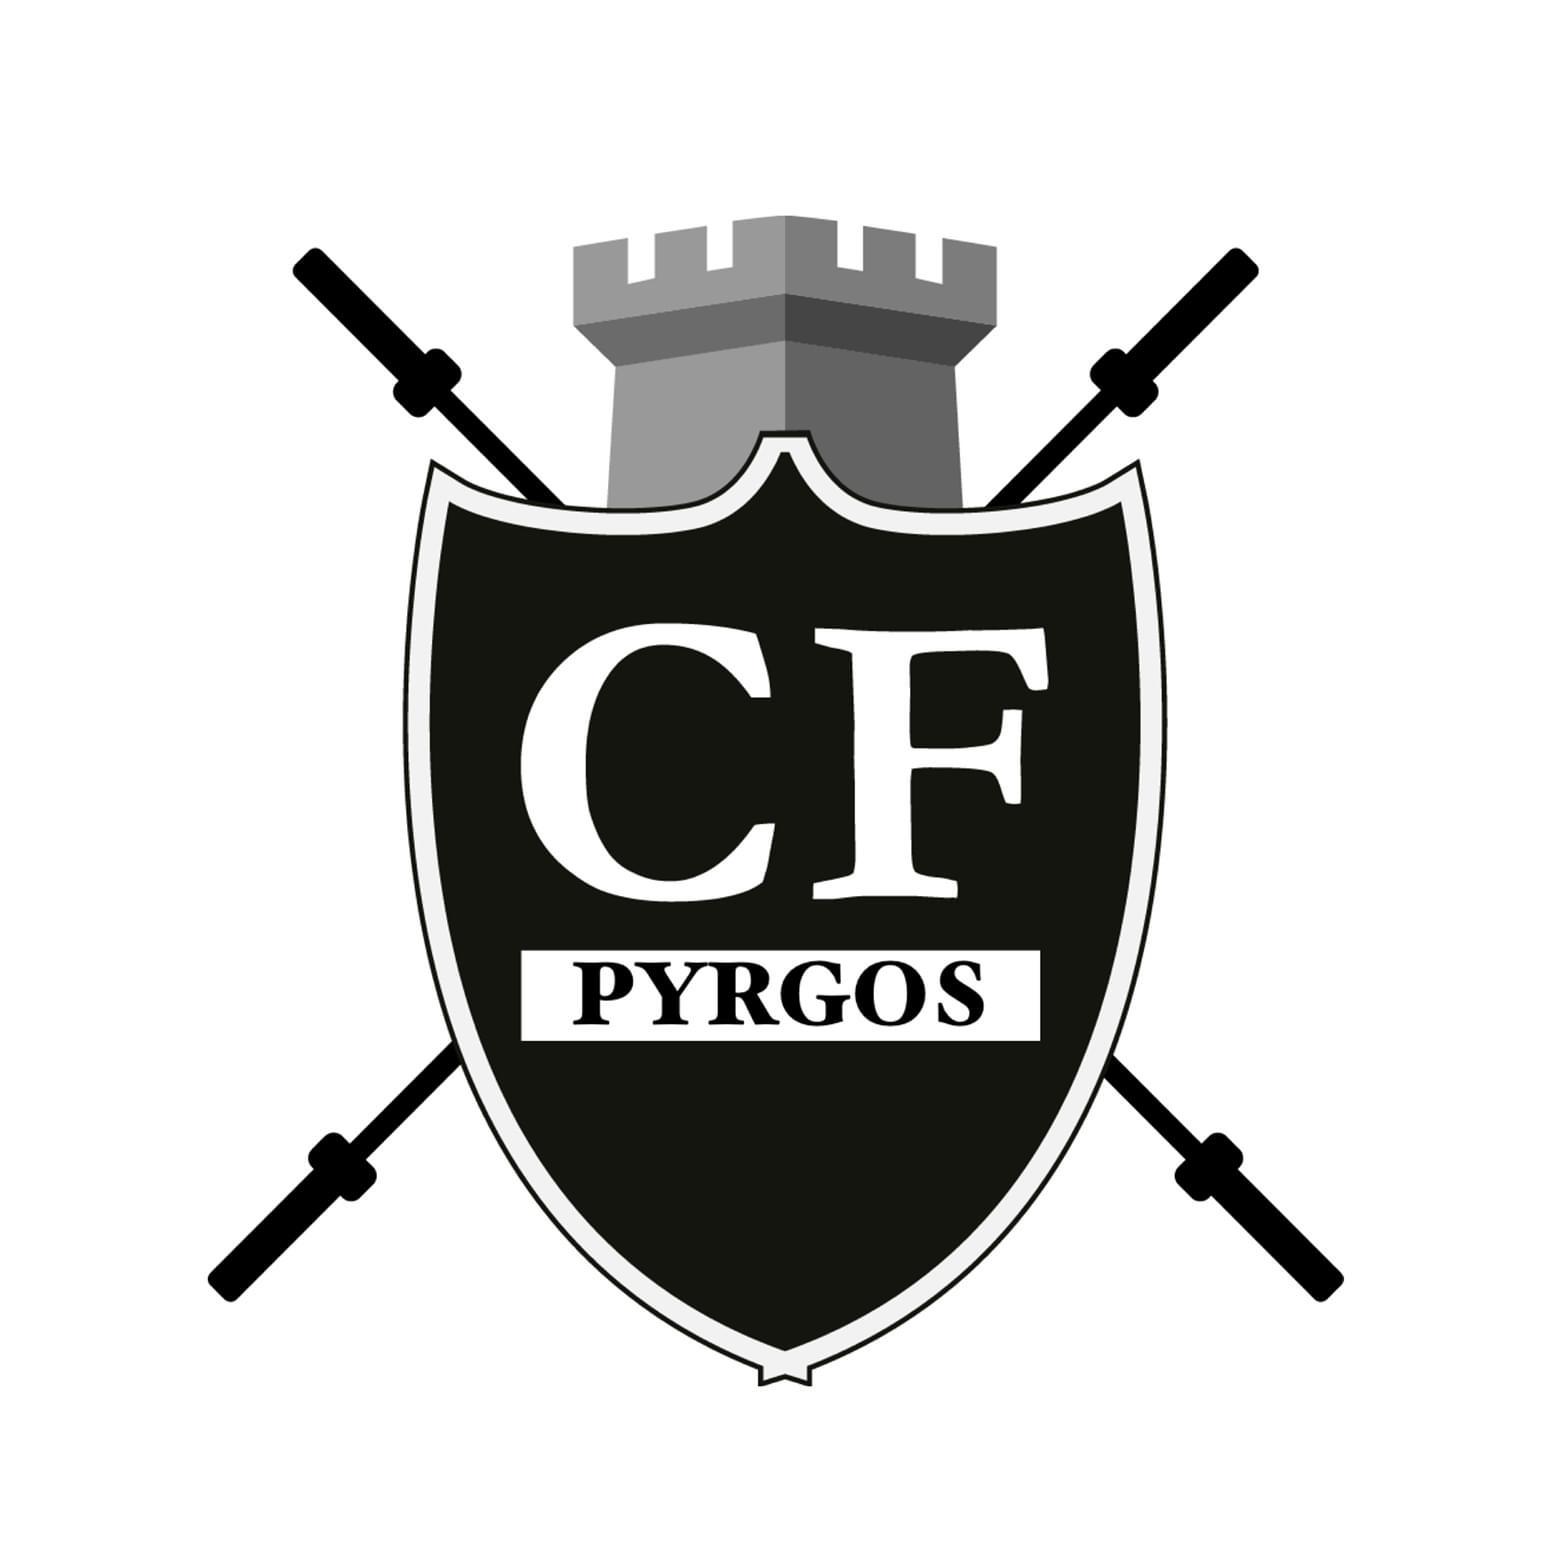 Crossfit Pygros